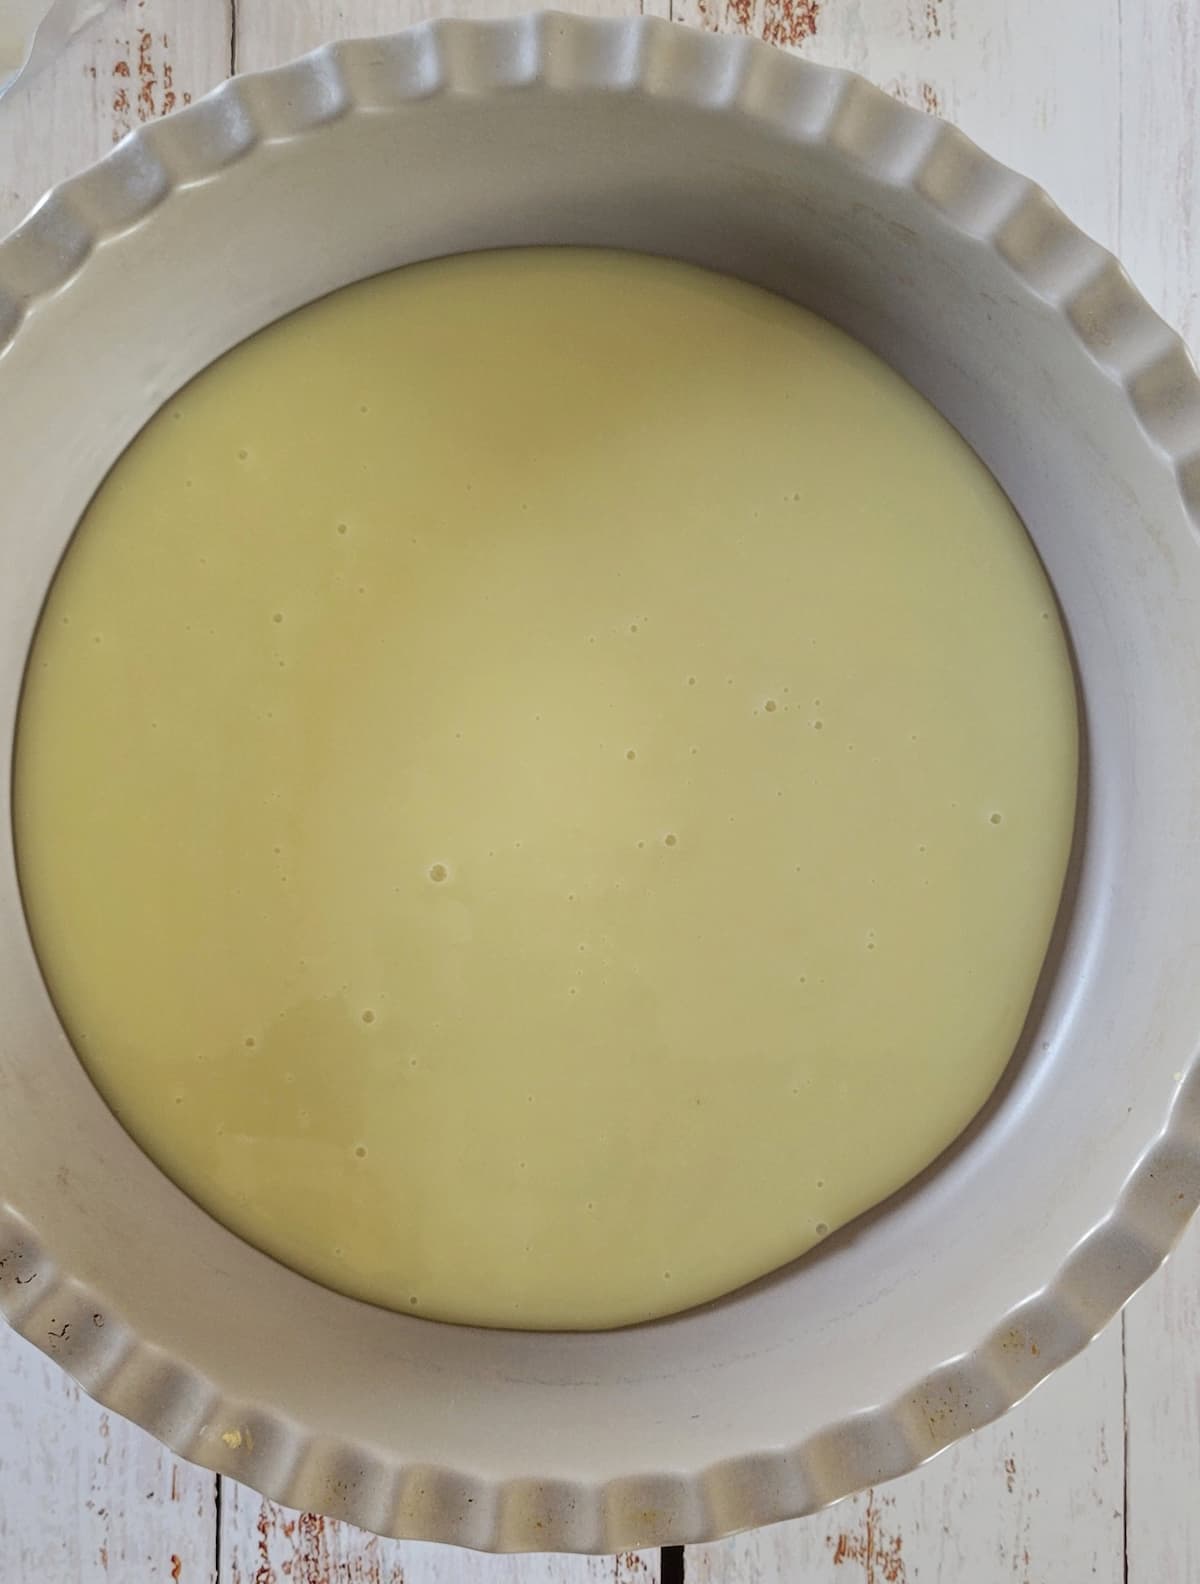 condensed milk in a pie dish